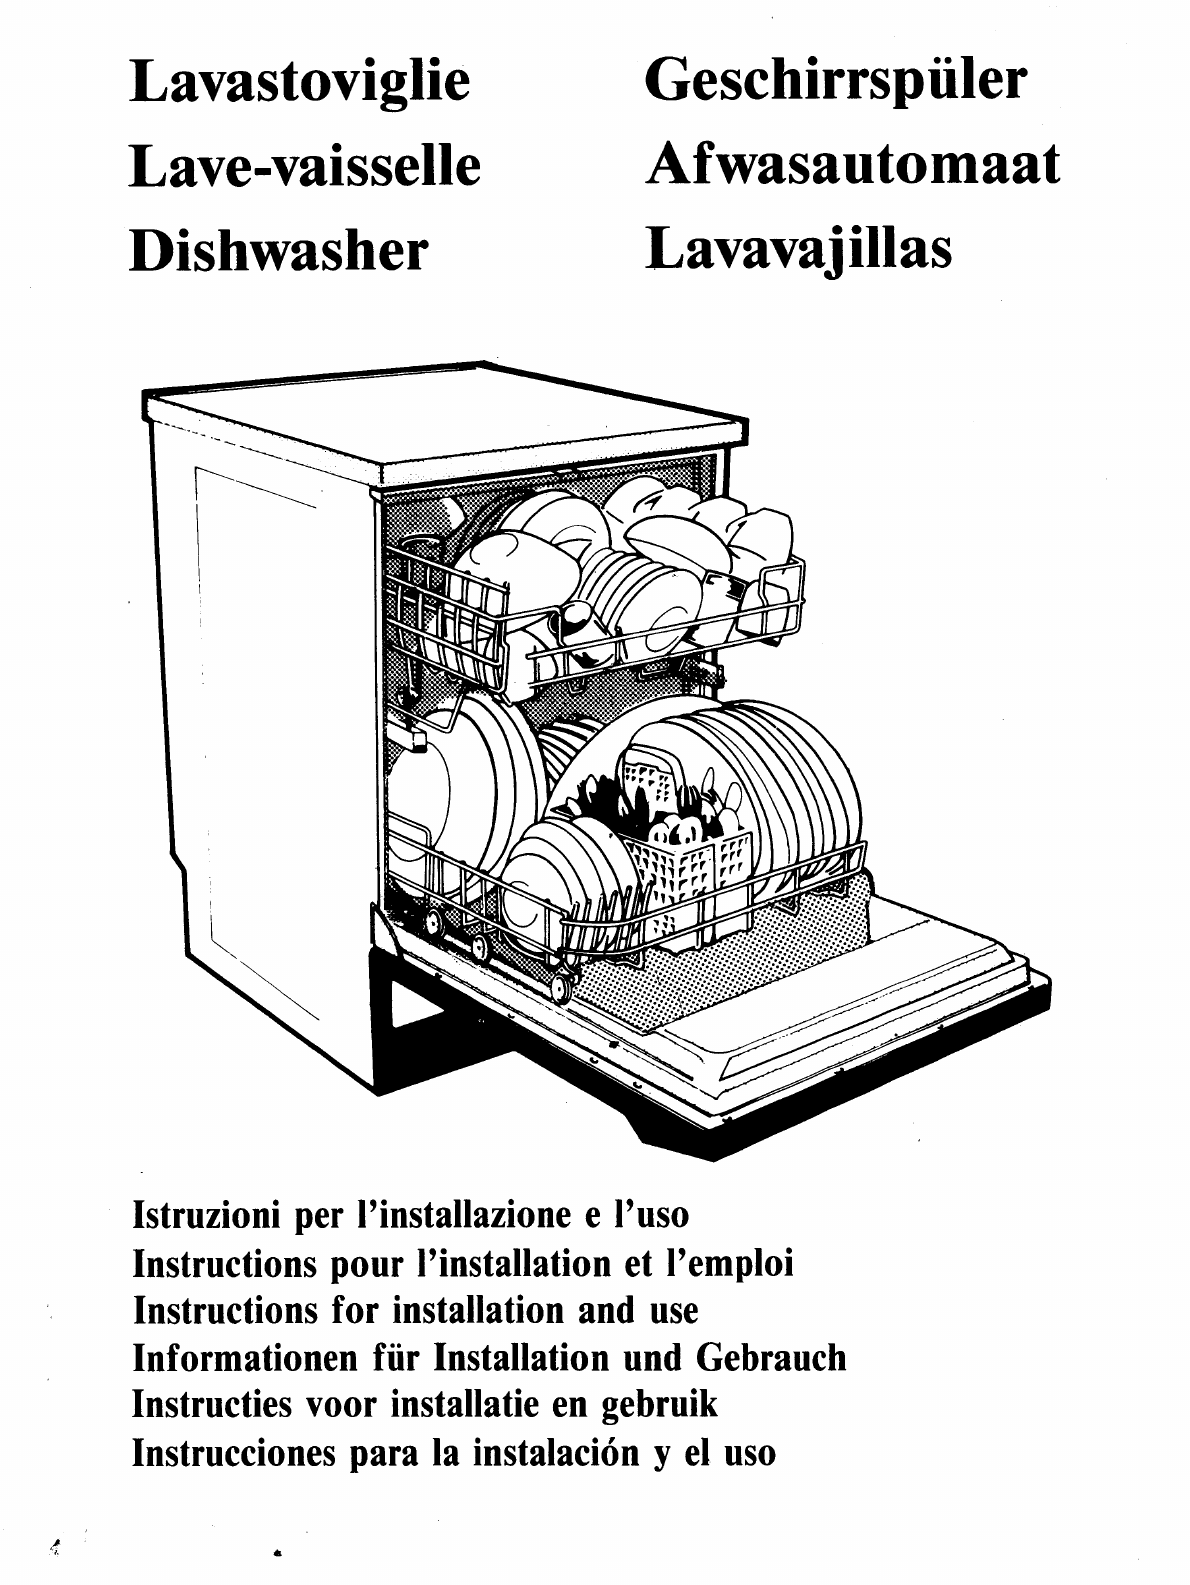 Smeg Dishwasher 3lns911 User Guide Manualsonline Com